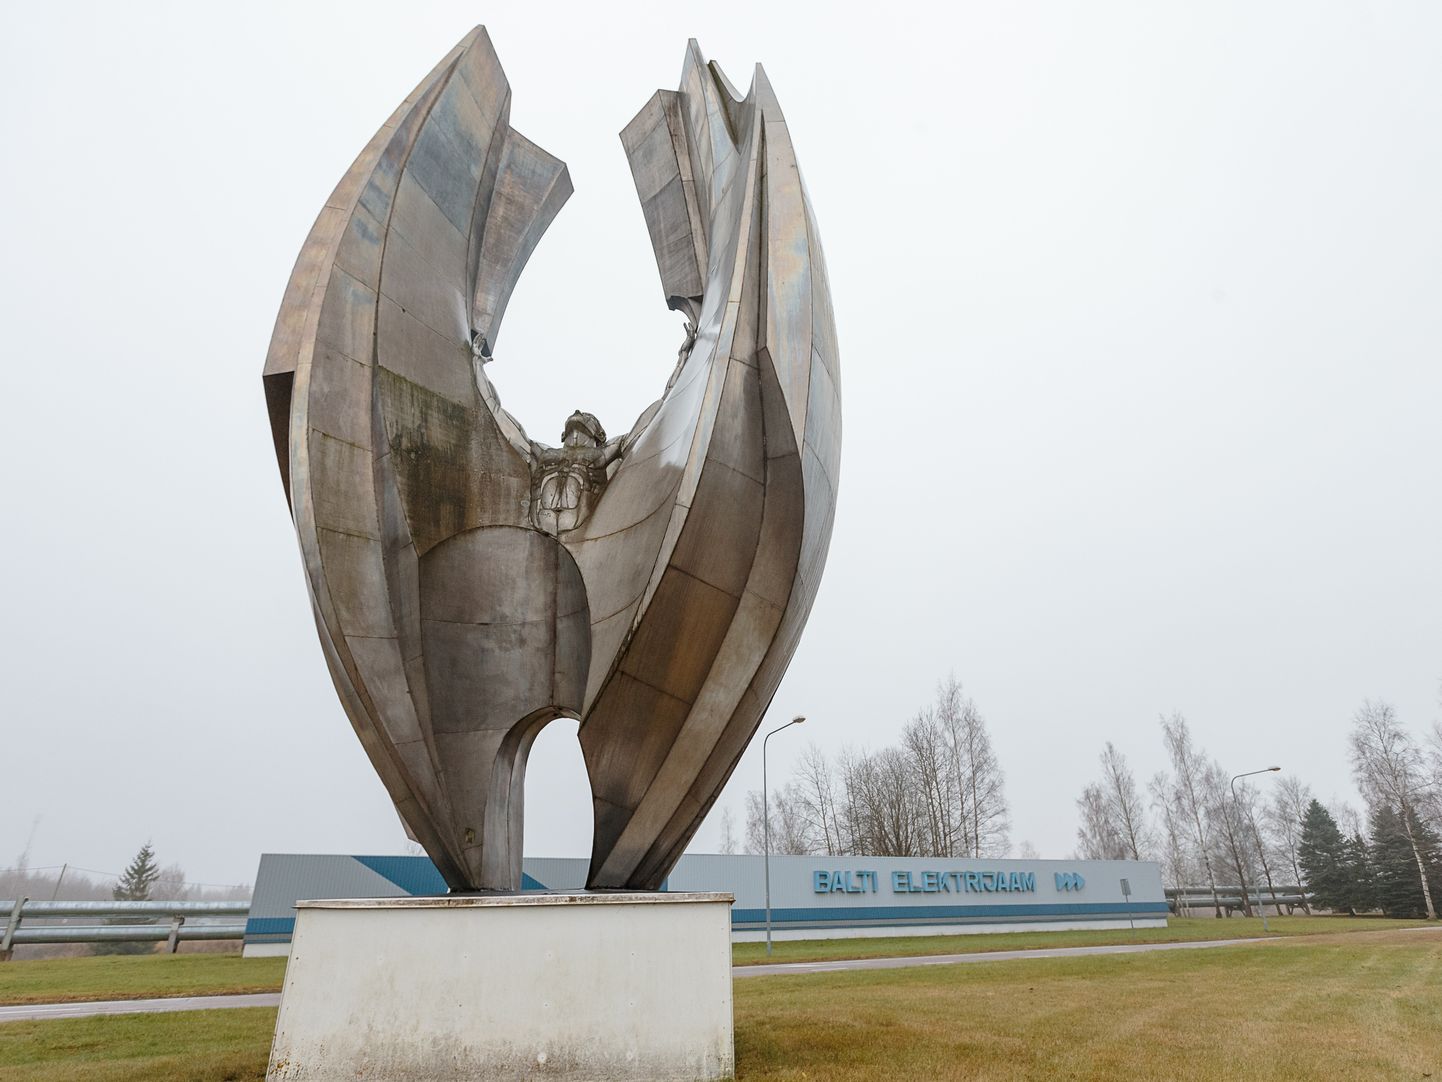 Символ Балтийской электростанции "Eesti Energia" - Икар, вздымающий к небу руки-крылья.